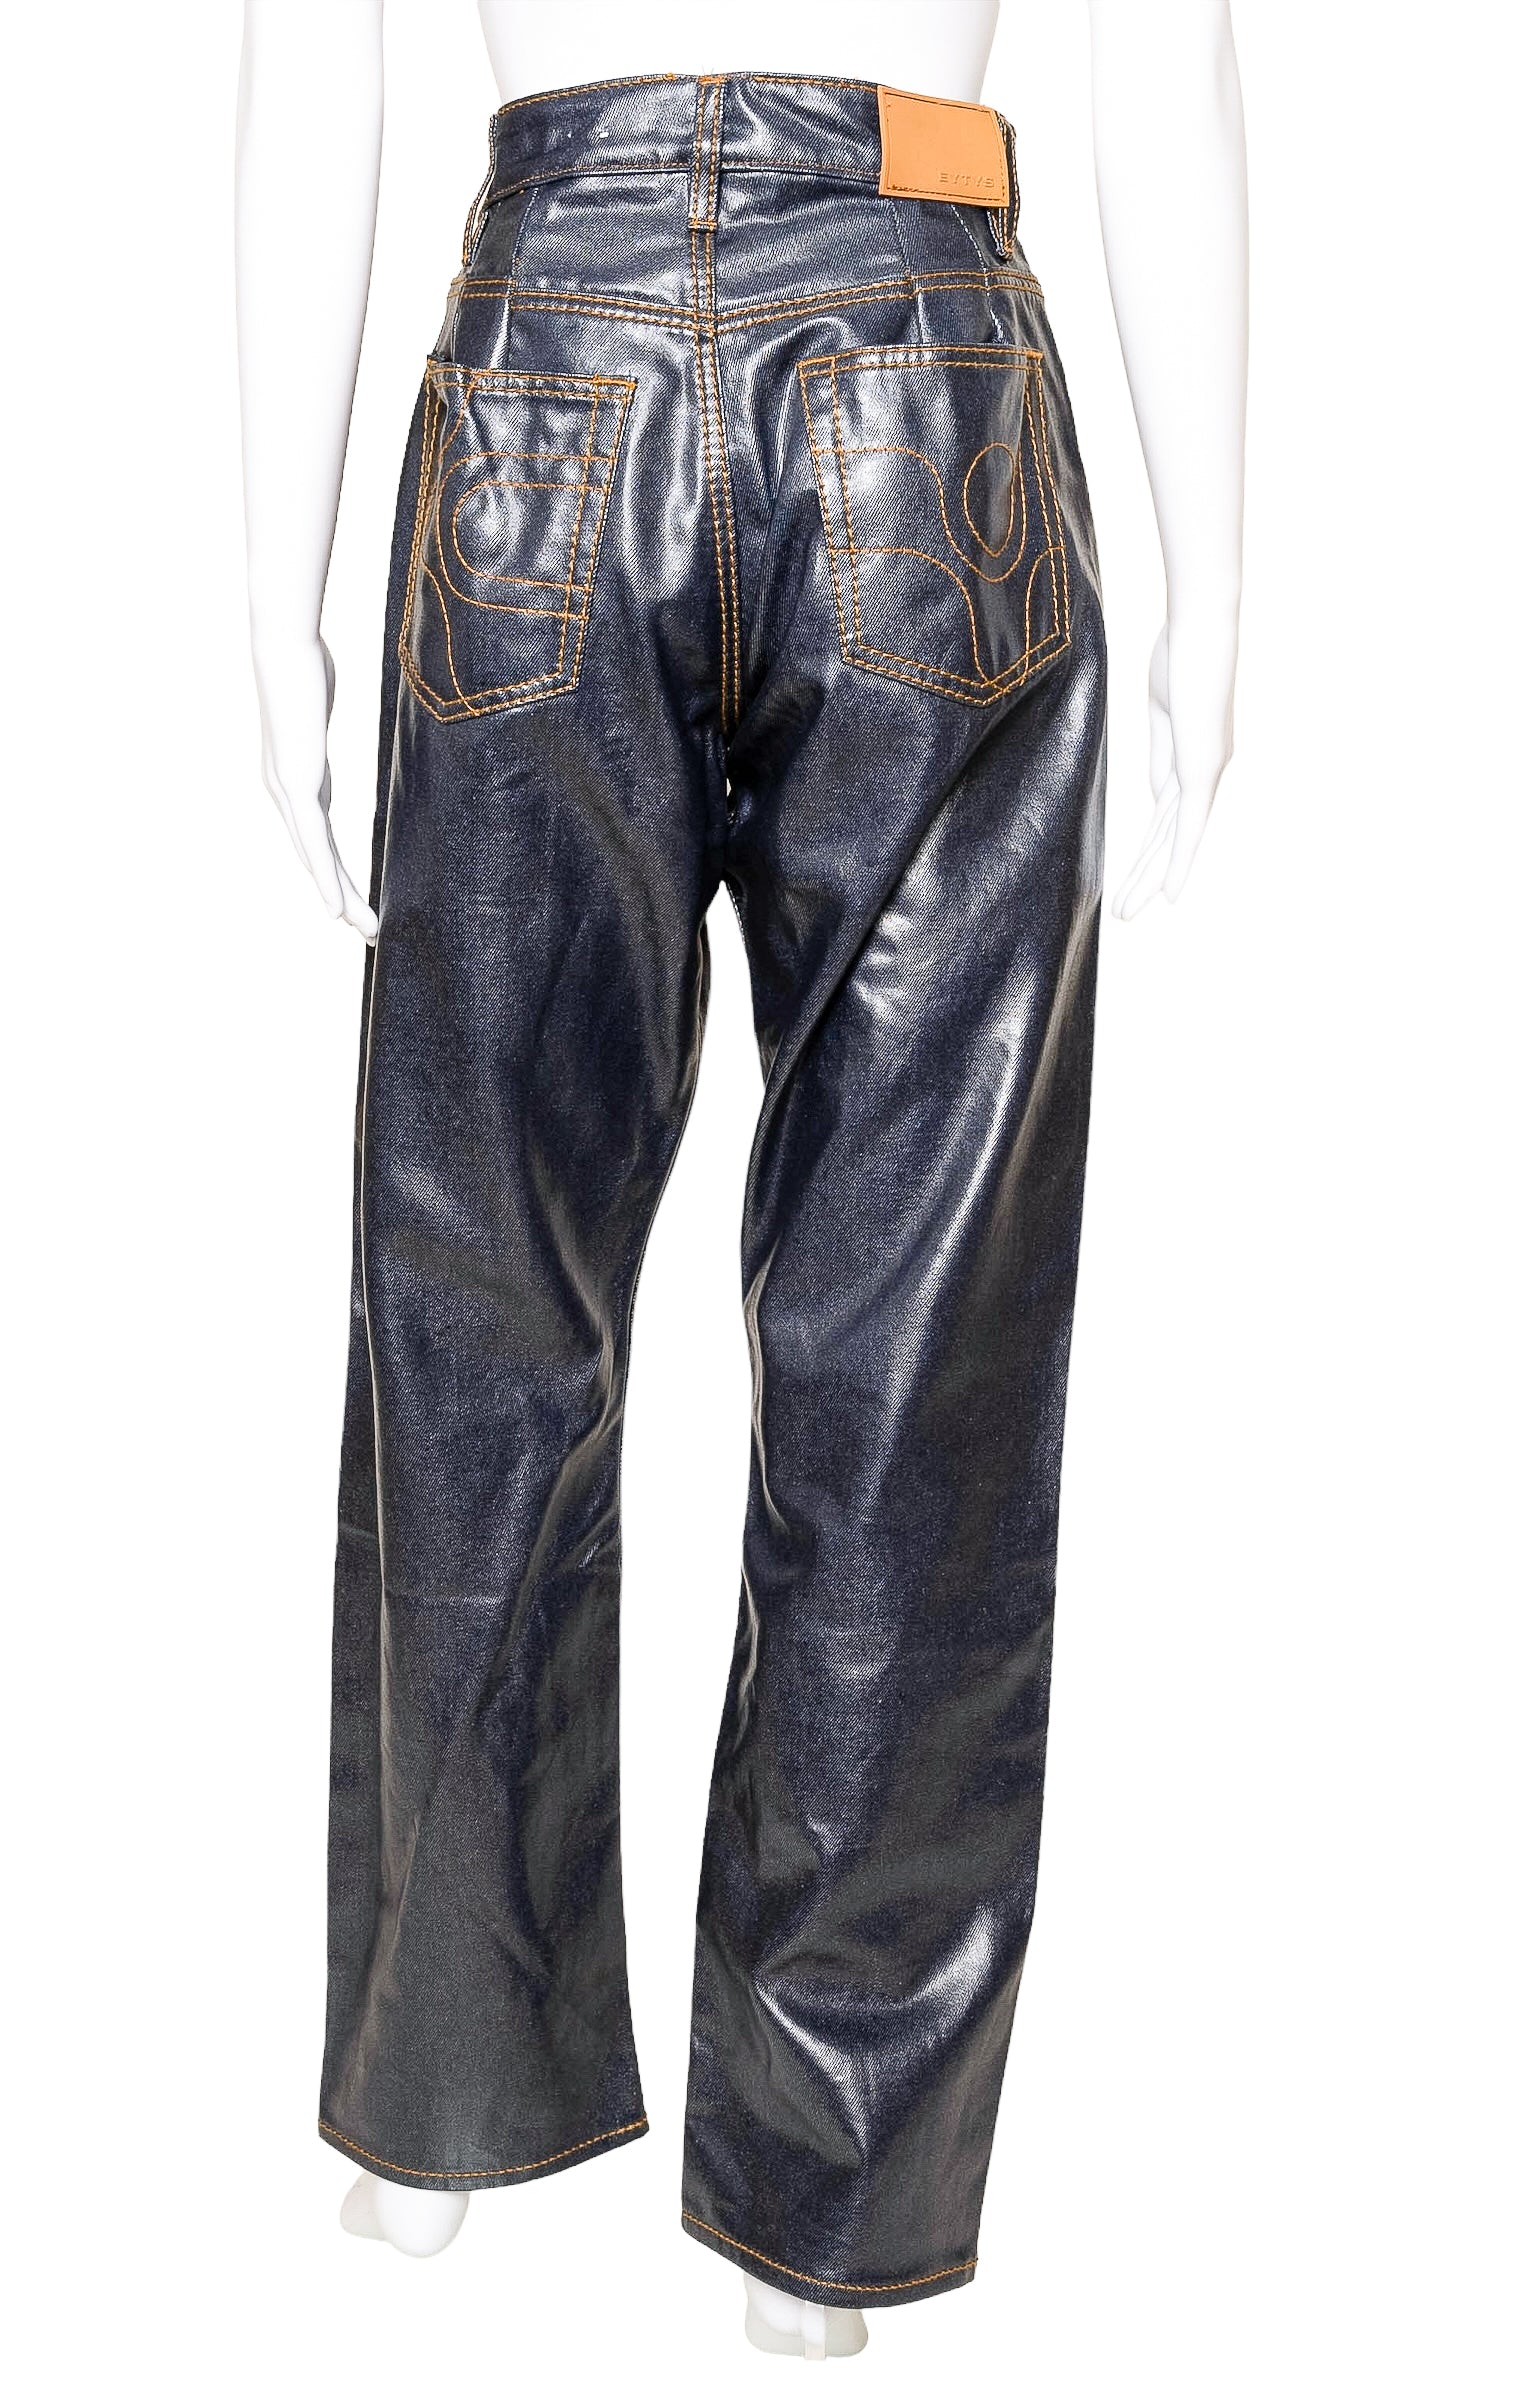 Post Bliv klar hovedsagelig EYTYS Jeans Size: Marked a size 33/32 but fit like US 6-8 – Kardashian  Kloset